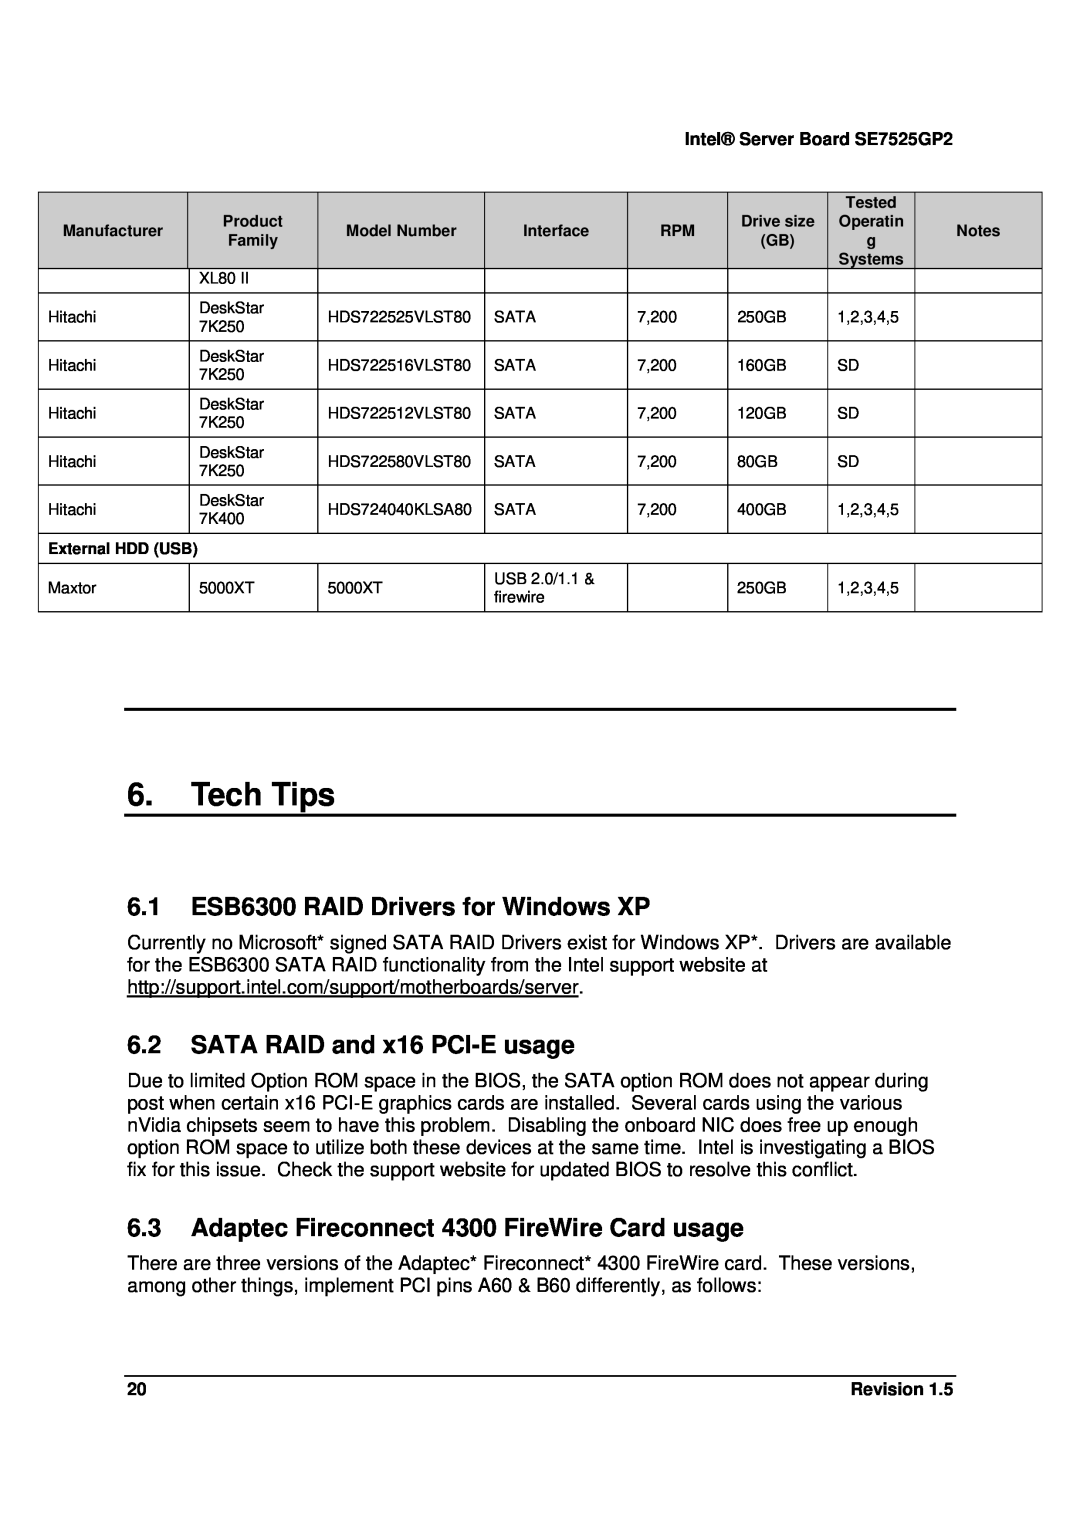 Intel SE7525GP2 manual Tech Tips, 6.1ESB6300 RAID Drivers for Windows XP, 6.2SATA RAID and x16 PCI-Eusage 